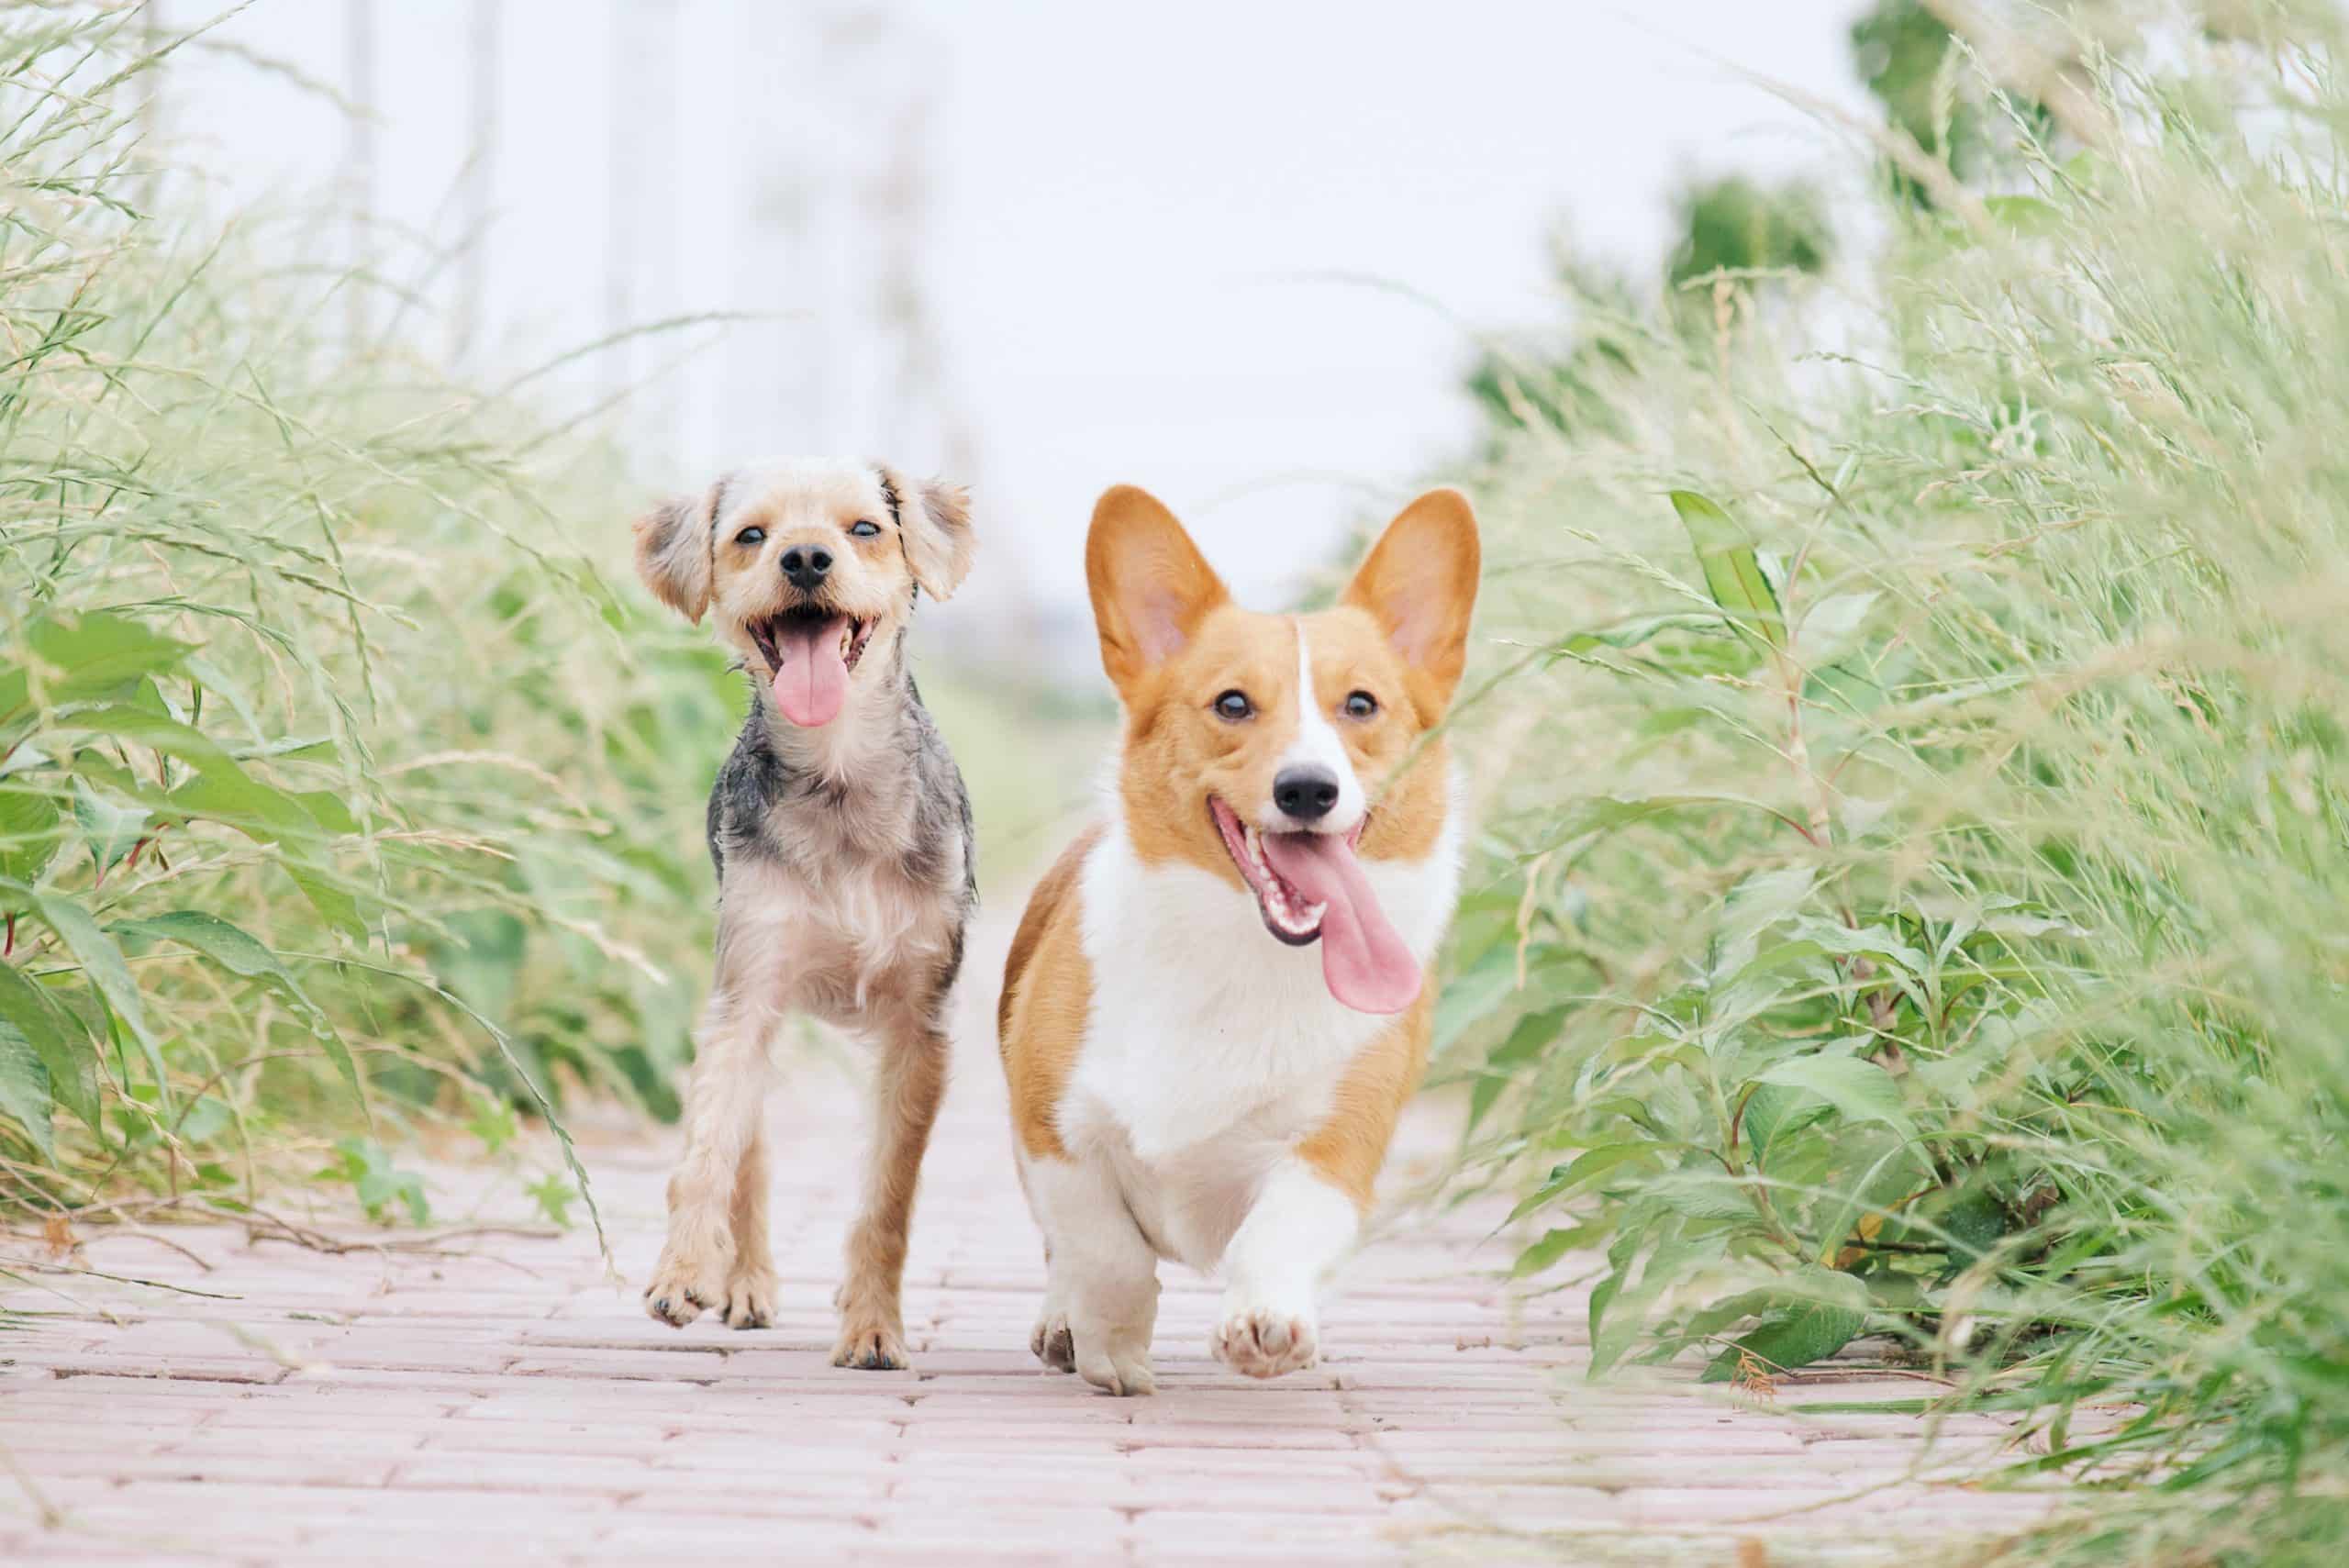 dos perros pequeños corren por un camino